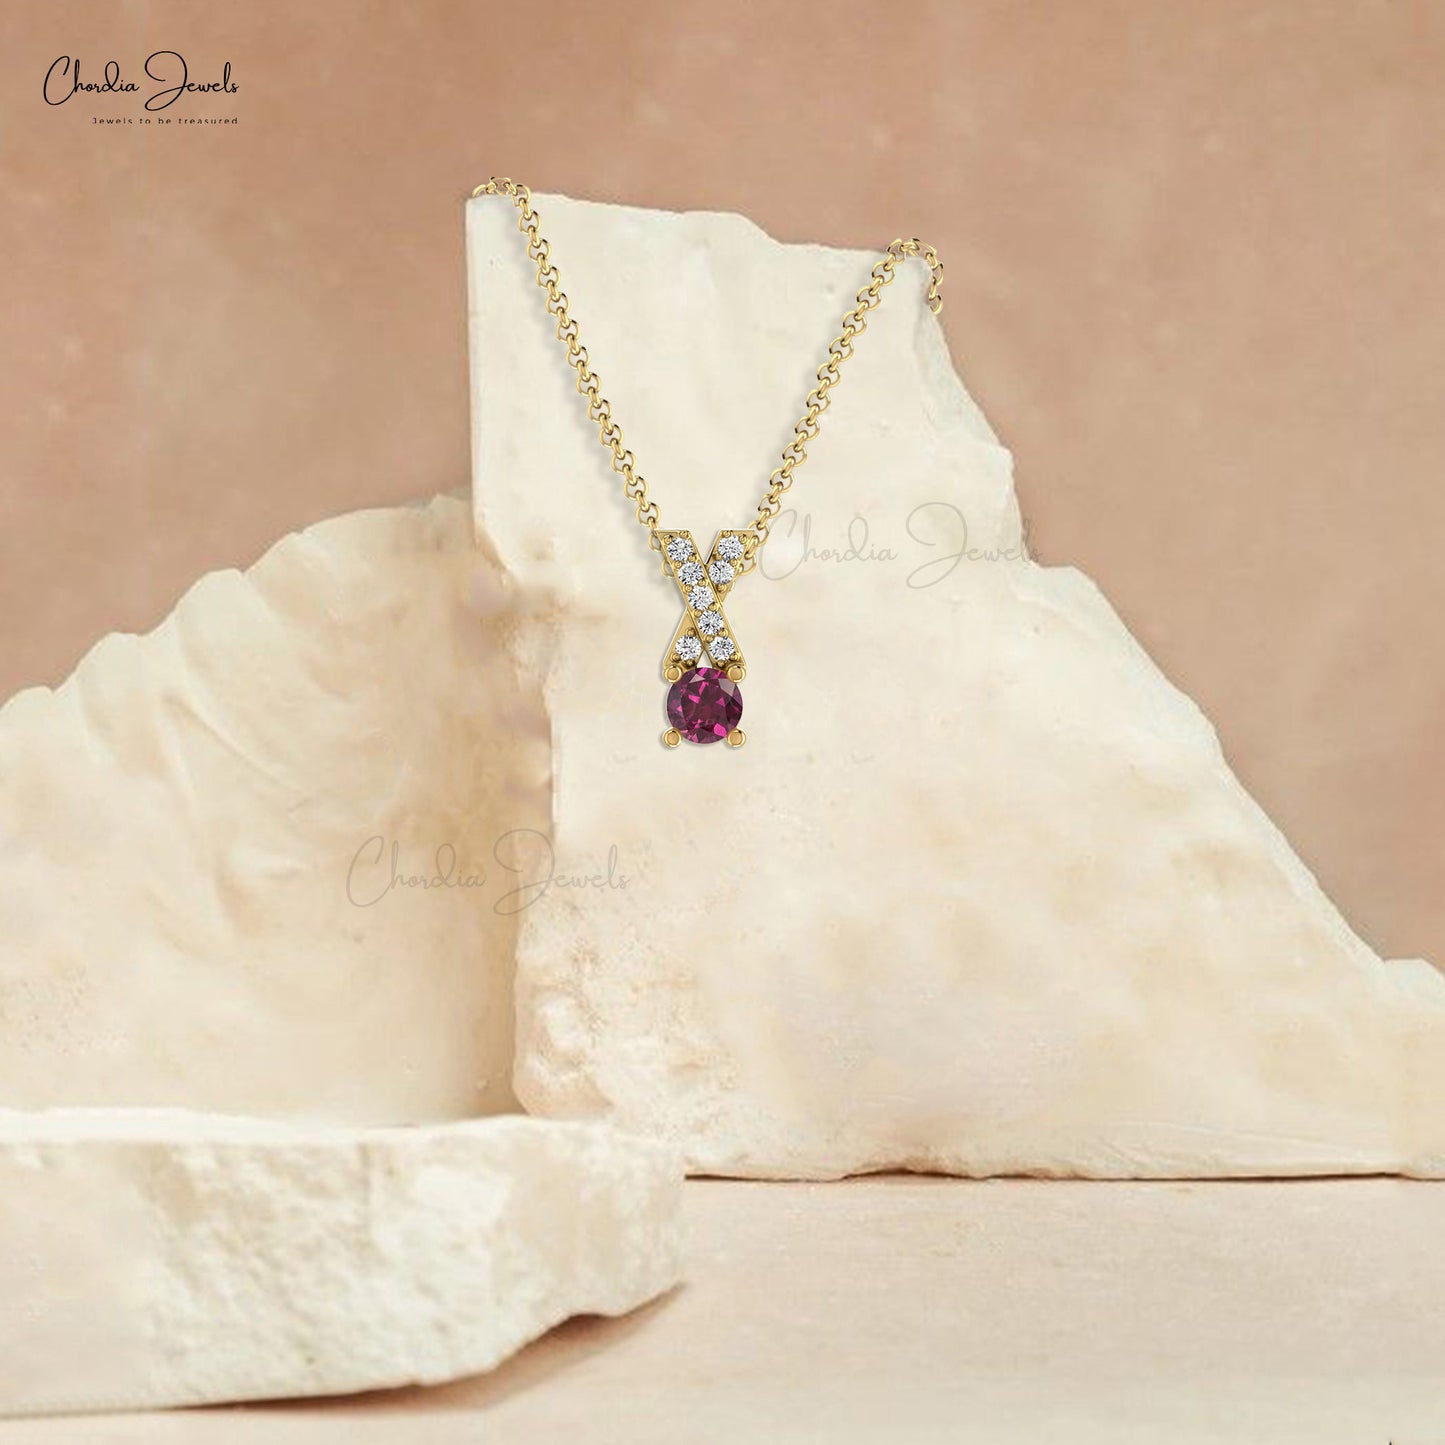 Delicate 14K Gold Rhodolite Garnet & G-H Diamond Criss Cross Pendant Necklace